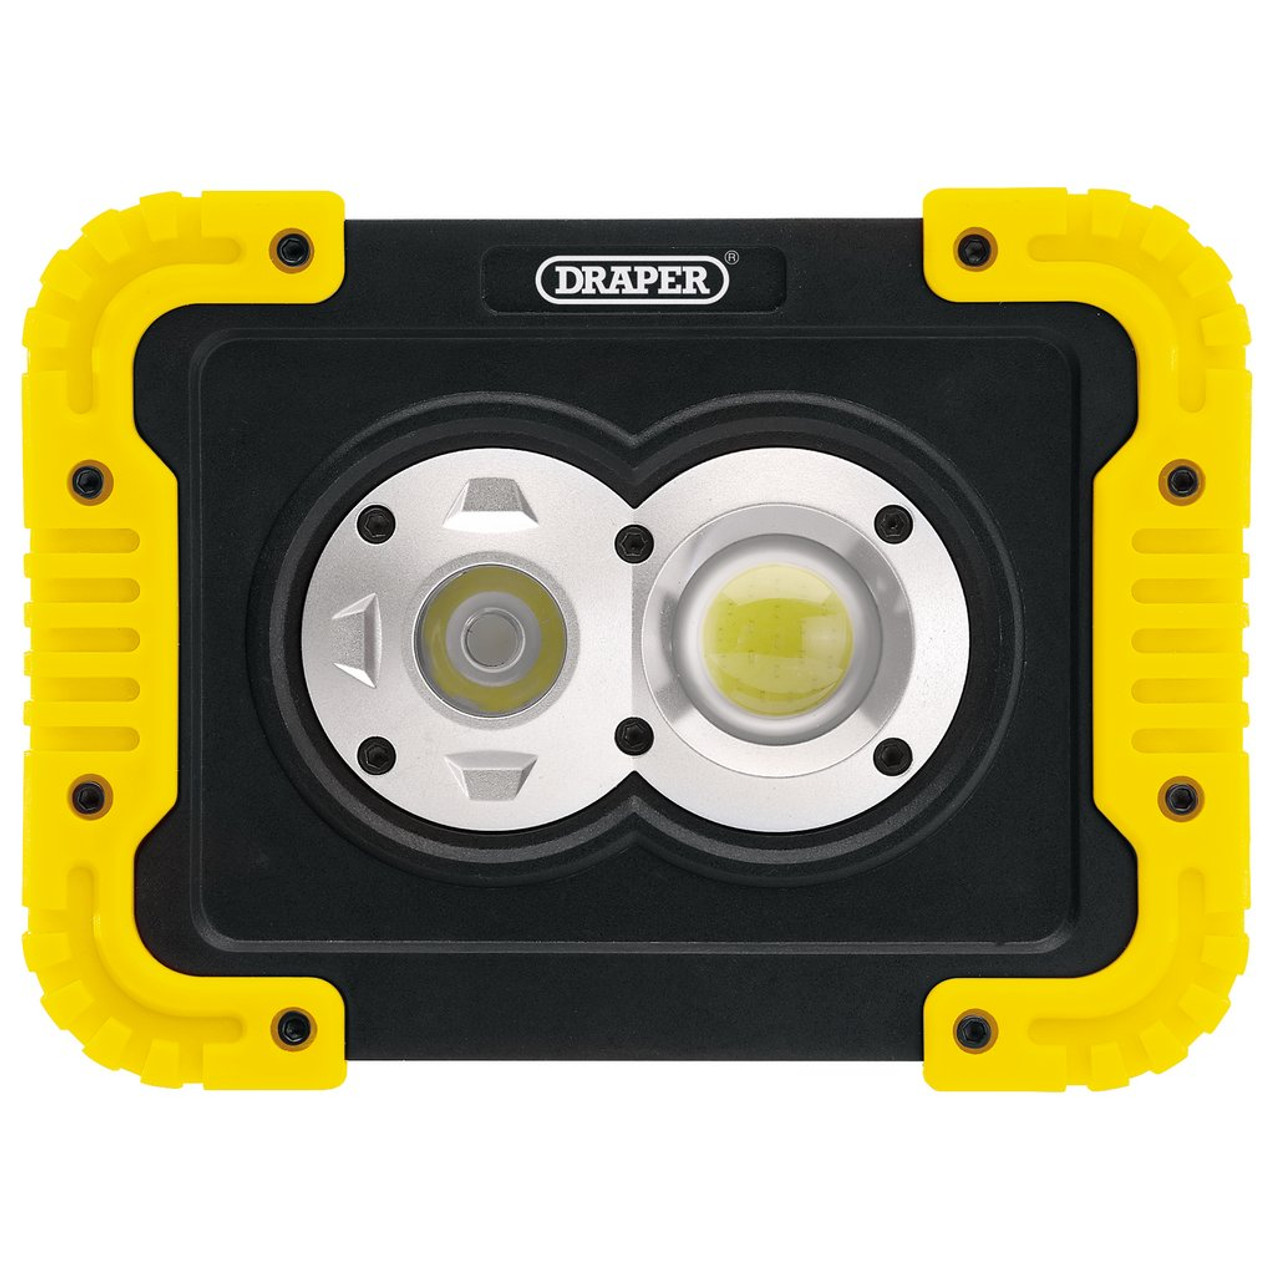 Pro Elec PEL00019 Work Light, LED, 10W, 240VAC, 750lm | Task & Inspection Lighting